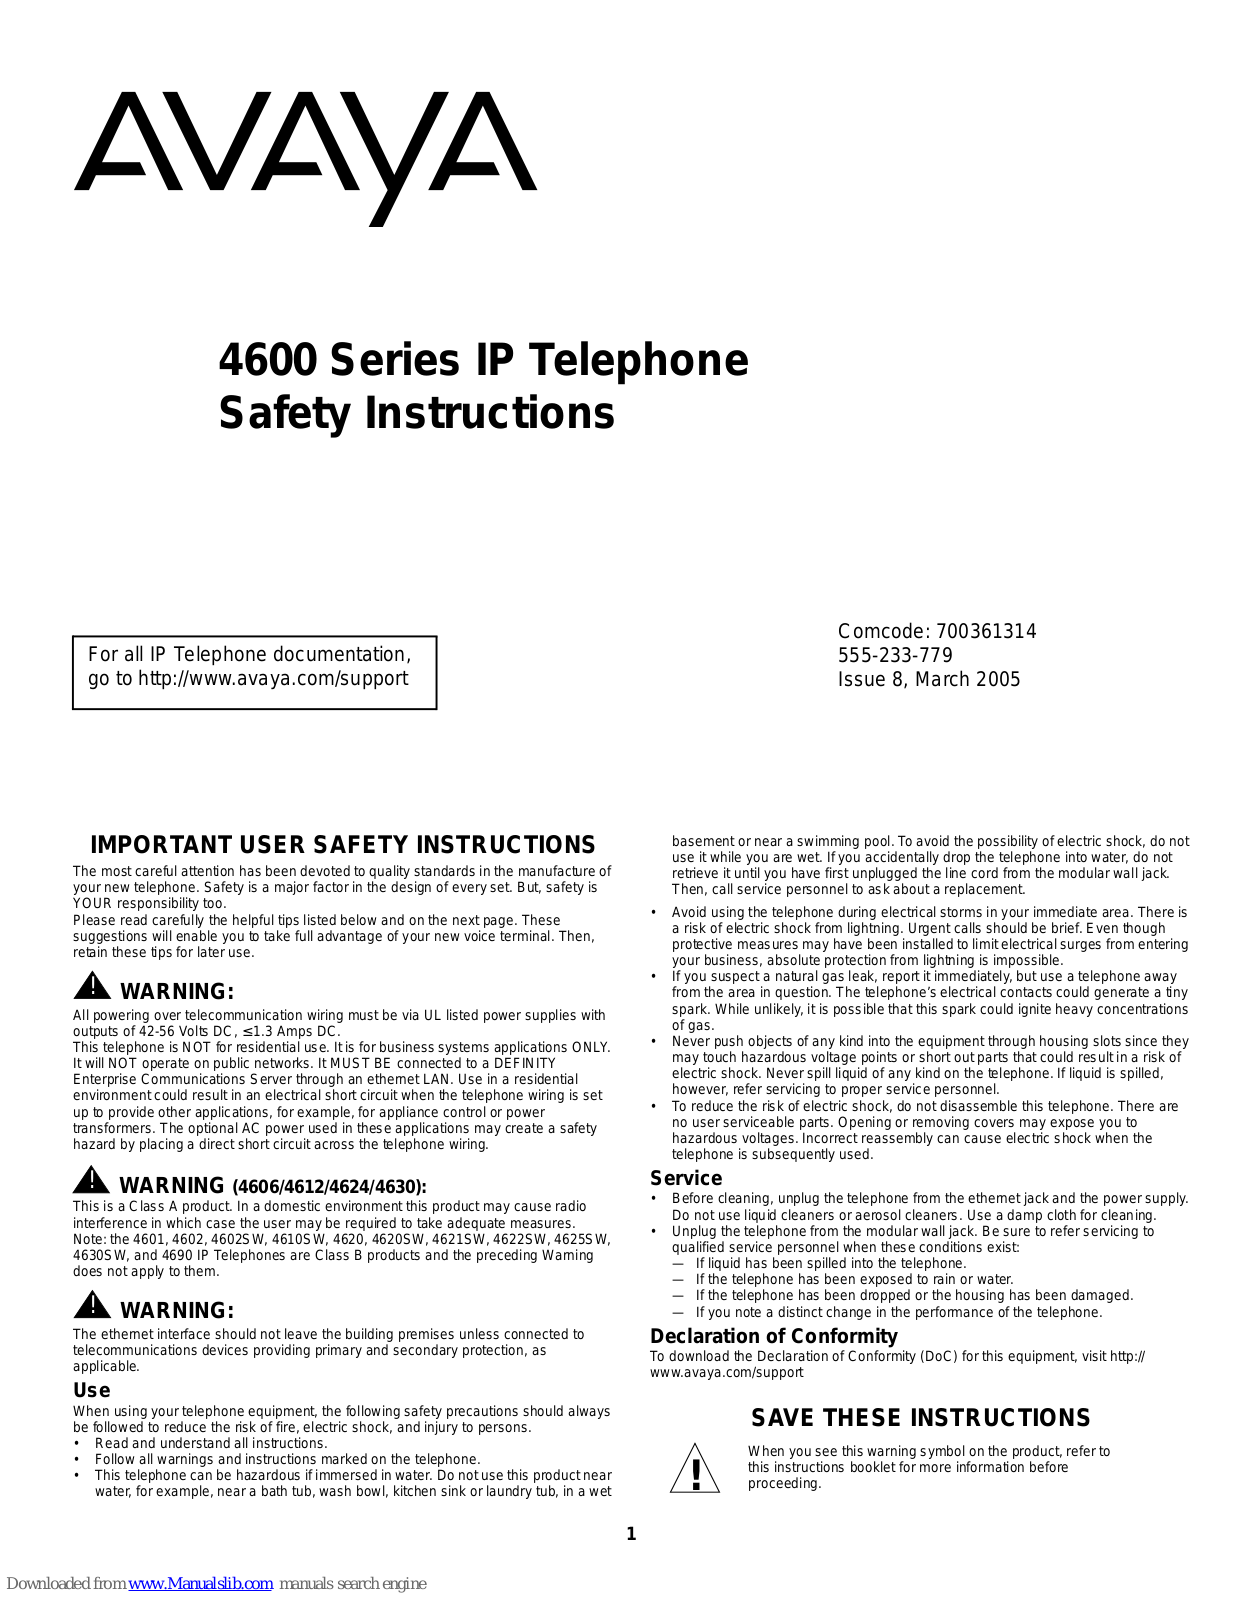 Avaya 4601, 4602, 4602SW, 4606, 4610SW Safety Instructions